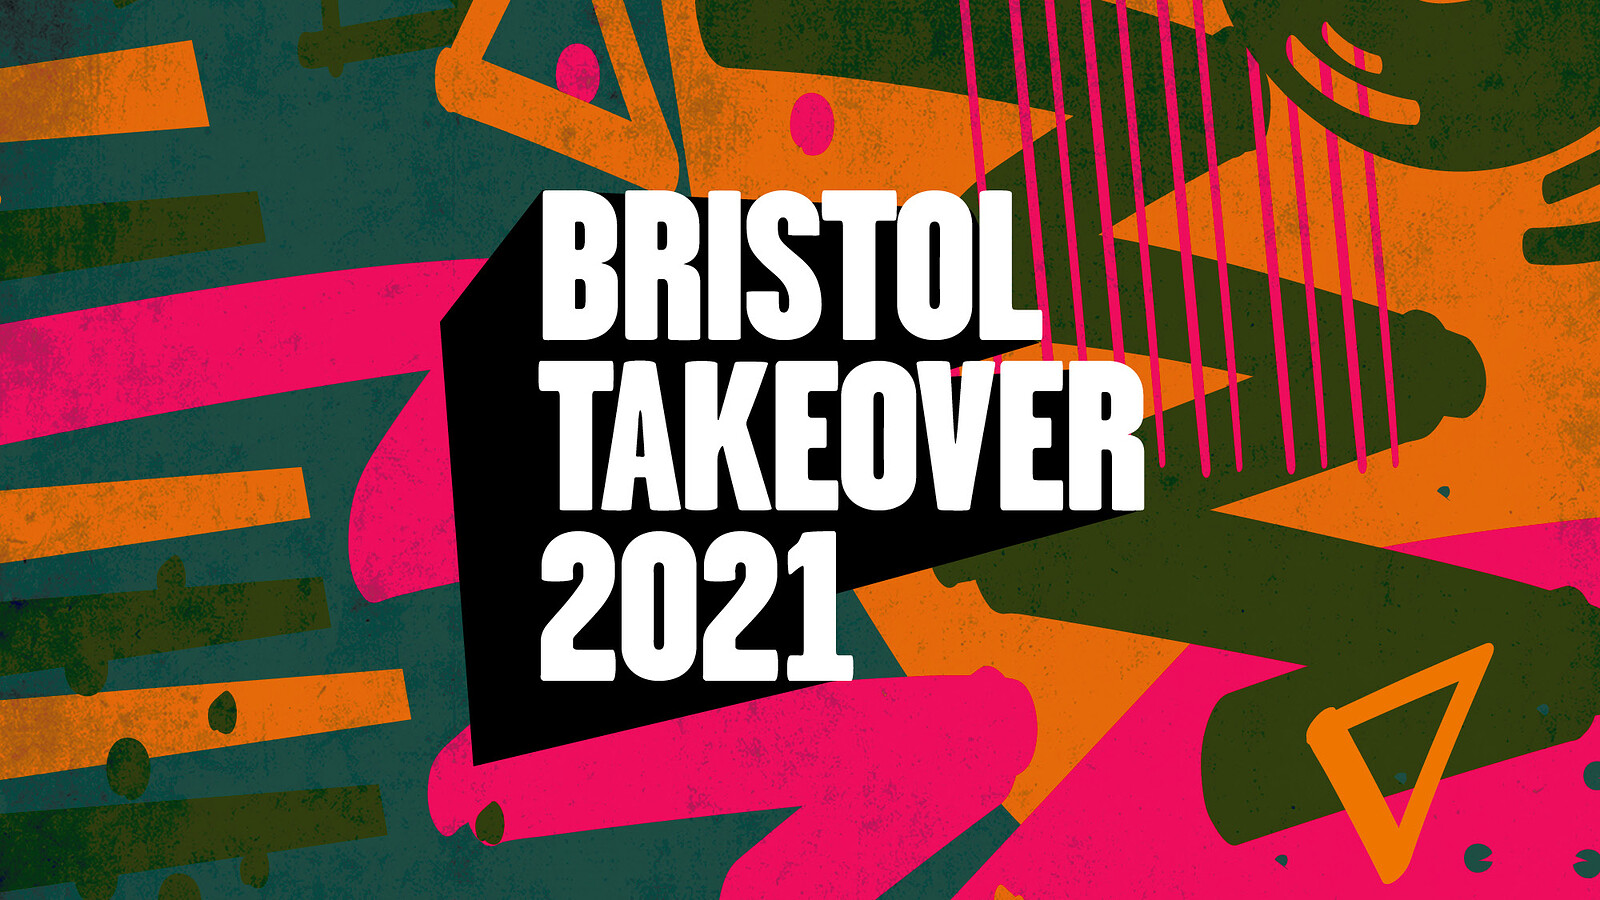 Bristol Takeover 2021 at Bristol Beacon